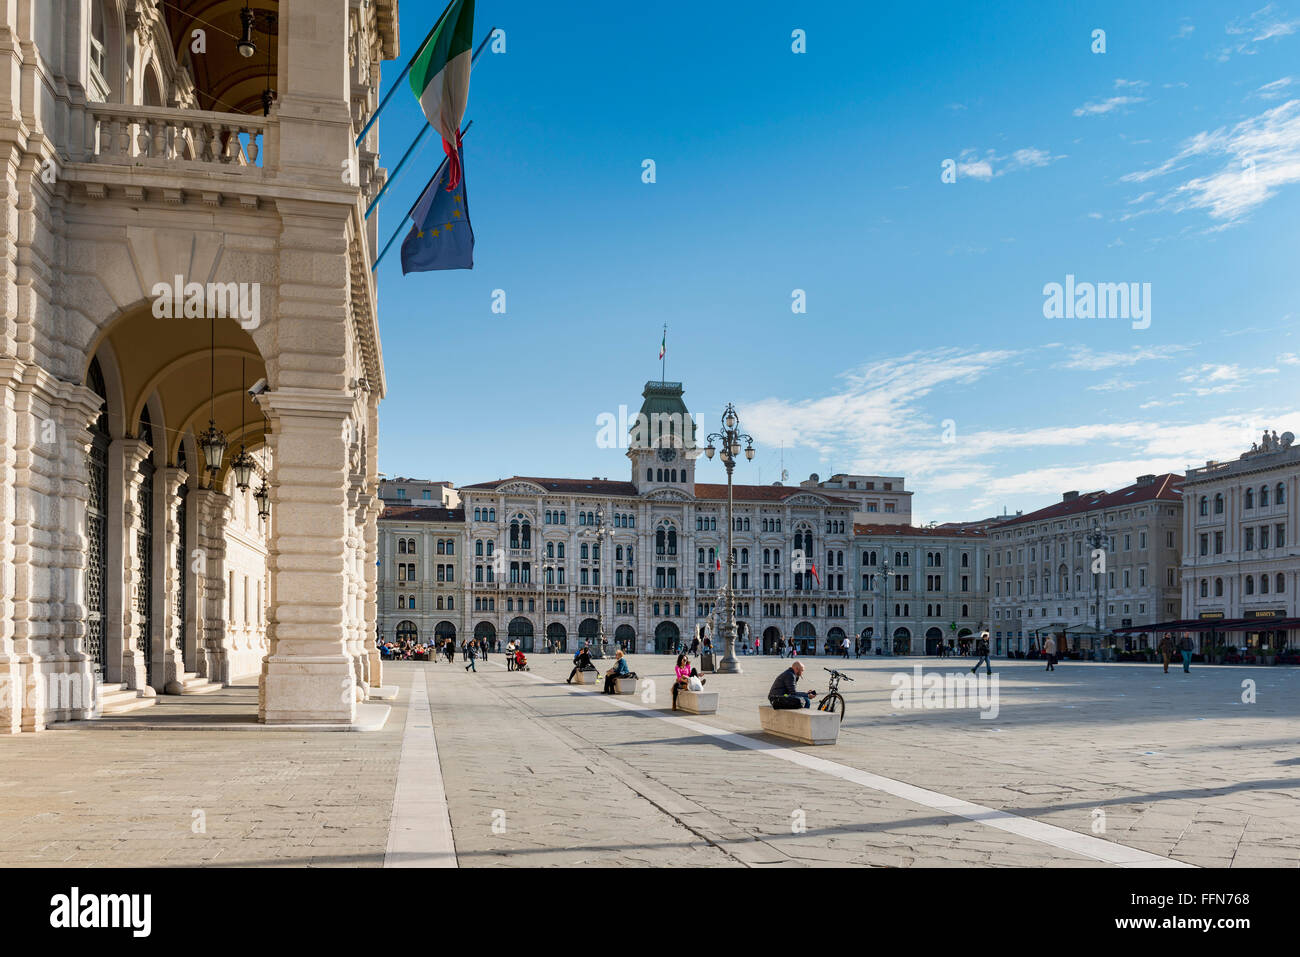 Trieste Italy, tourists in Piazza Unità d'Italia, the main square in Trieste, Italy, Europe Stock Photo